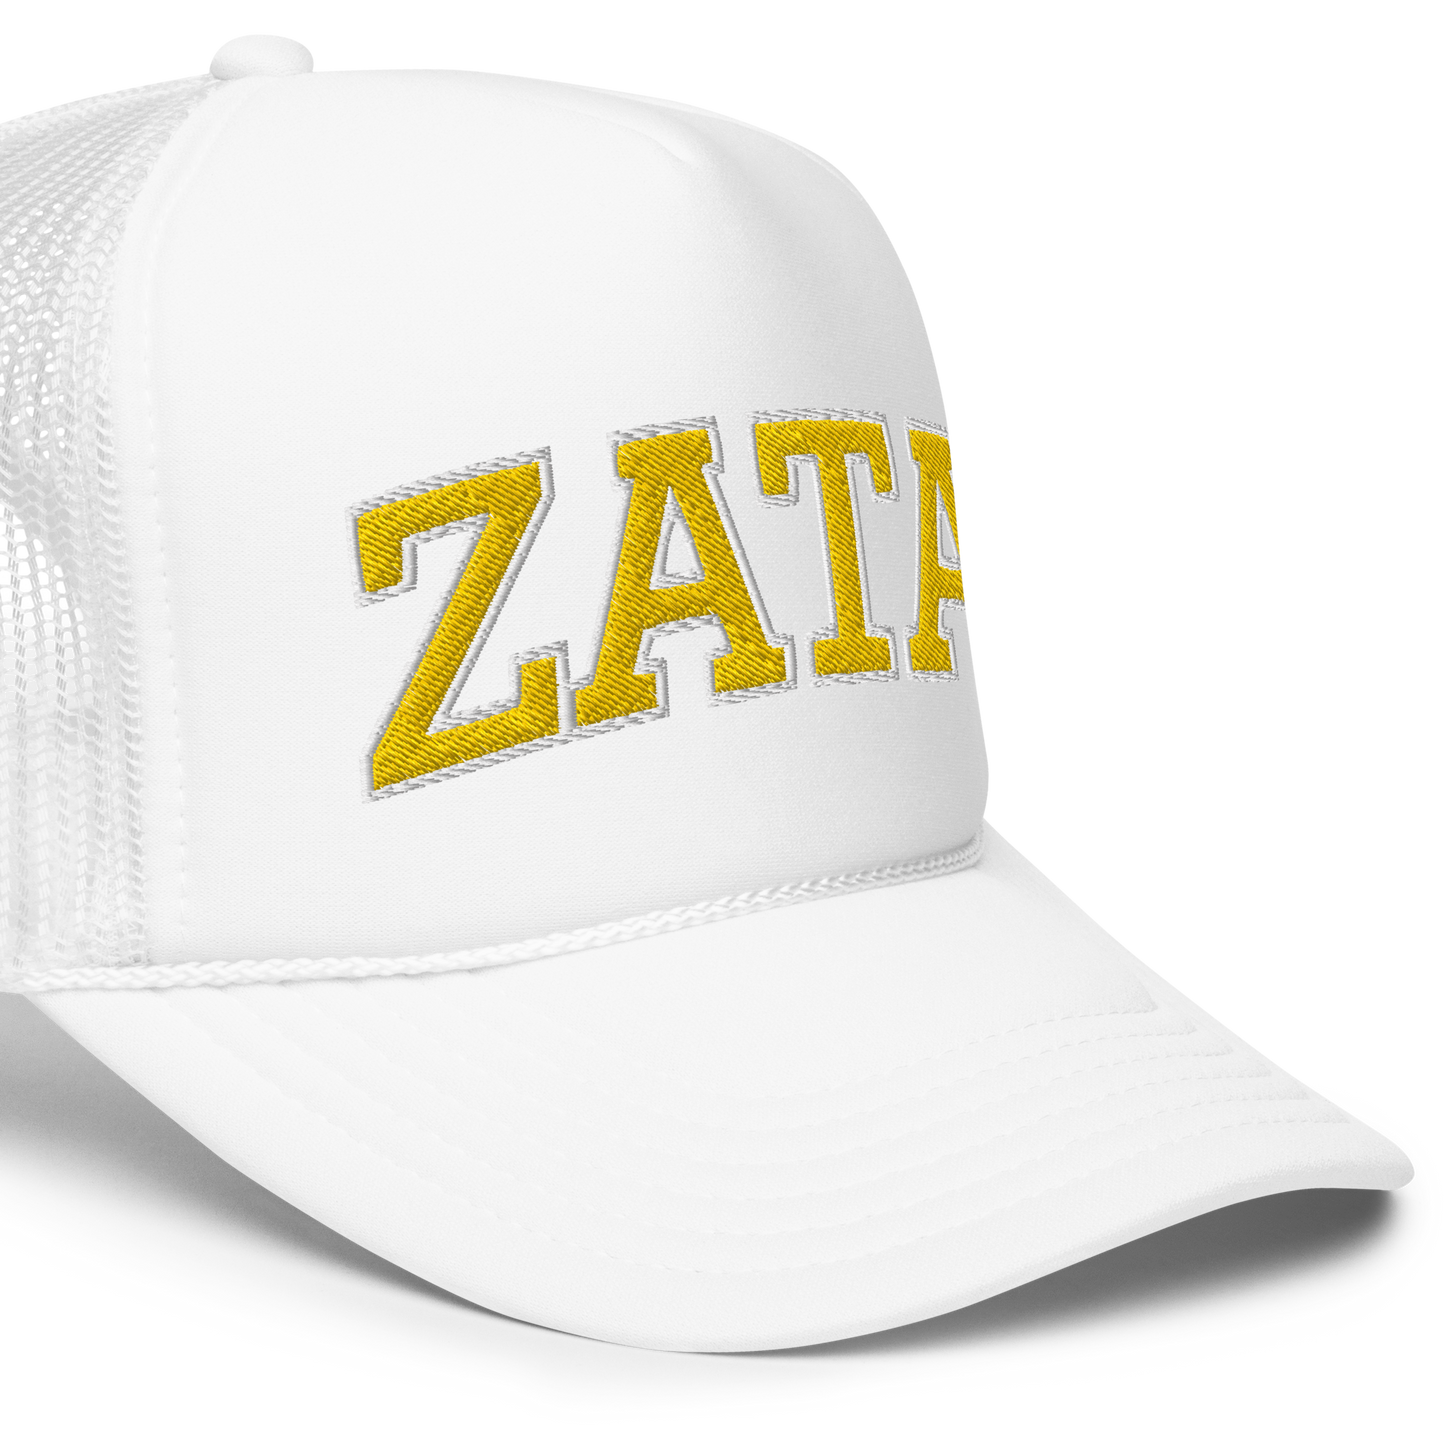 Zata Foam trucker hat